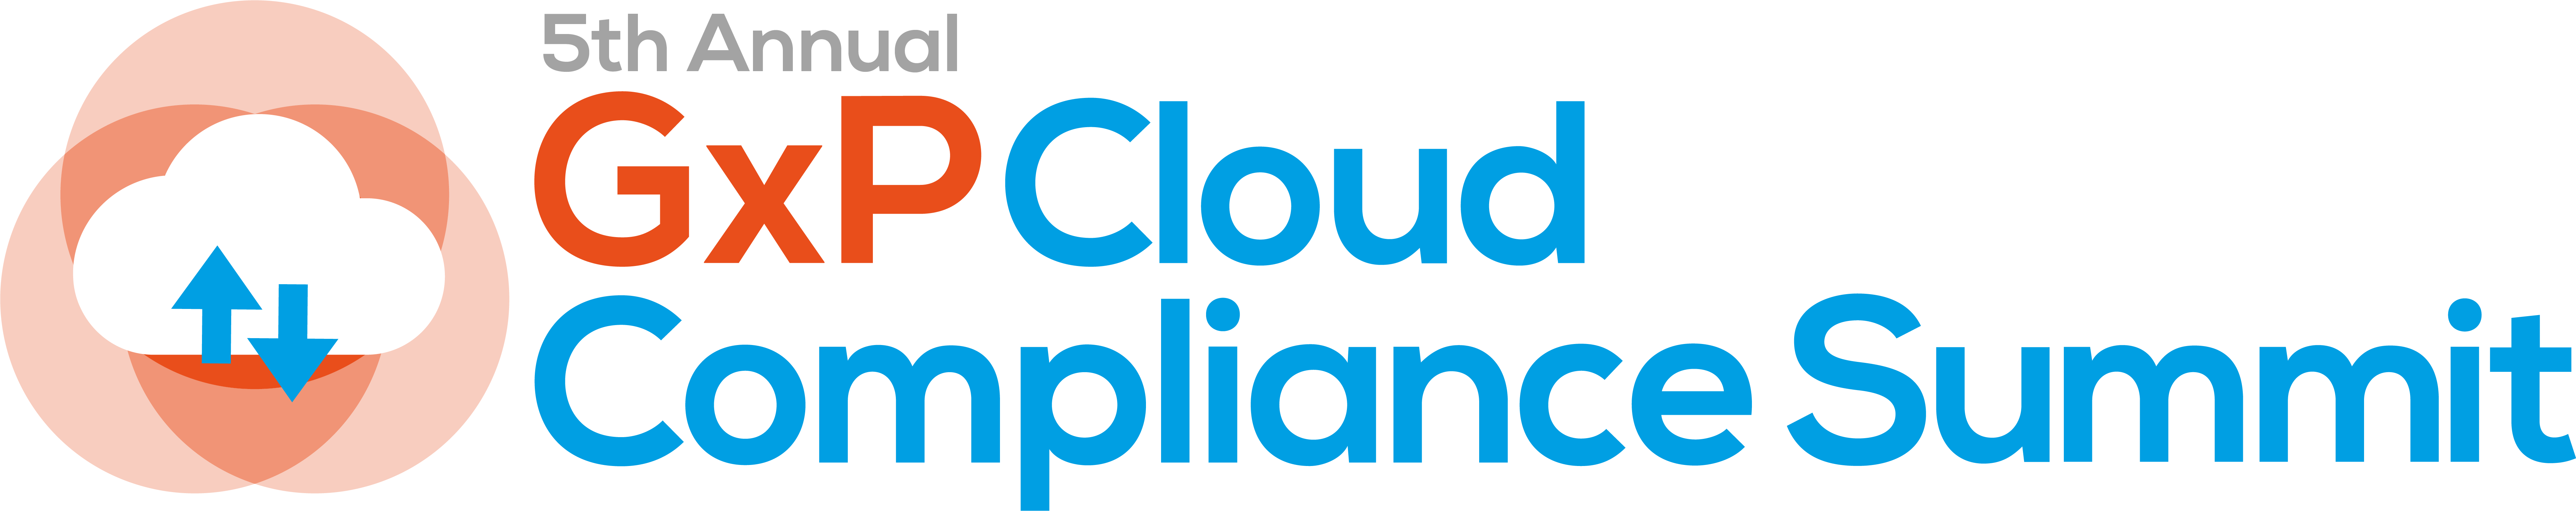 HW240412 5th GxP Cloud Compliance Summit logo